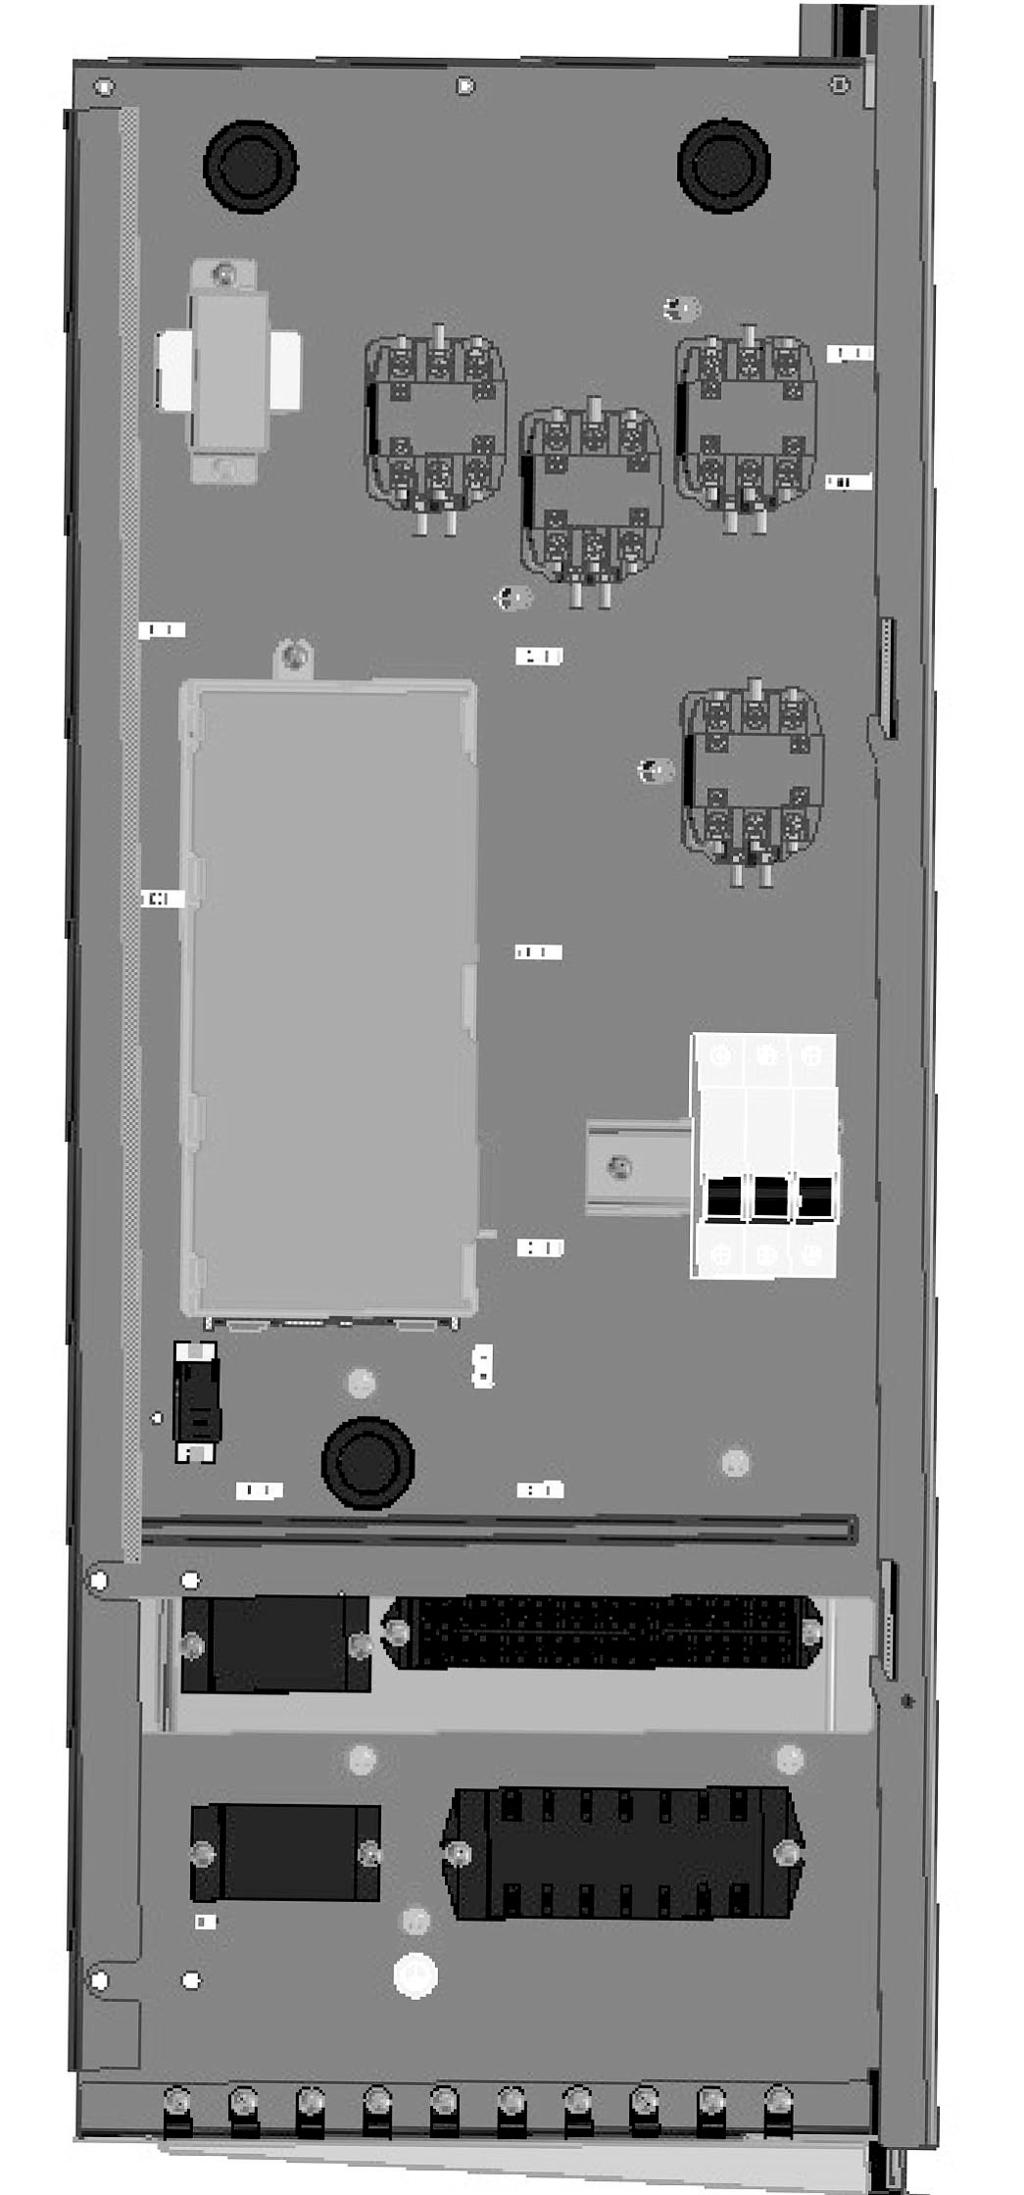 illustration below shows the switch box layout: TR KM KM